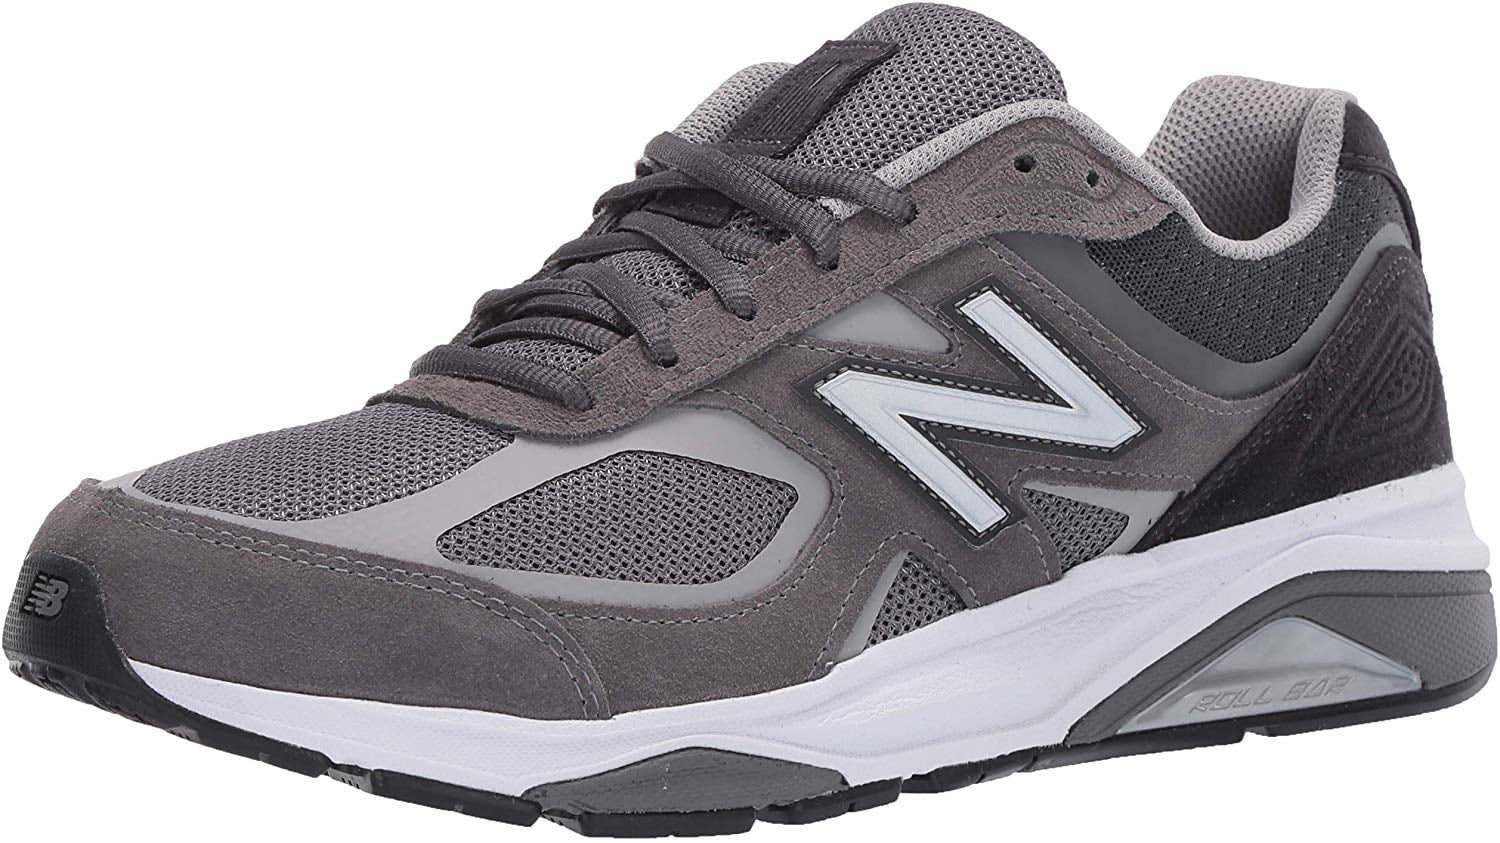 New Balance Men's 1540v3 Running Shoe, Grey/Black, 16 4E US | Walmart ...